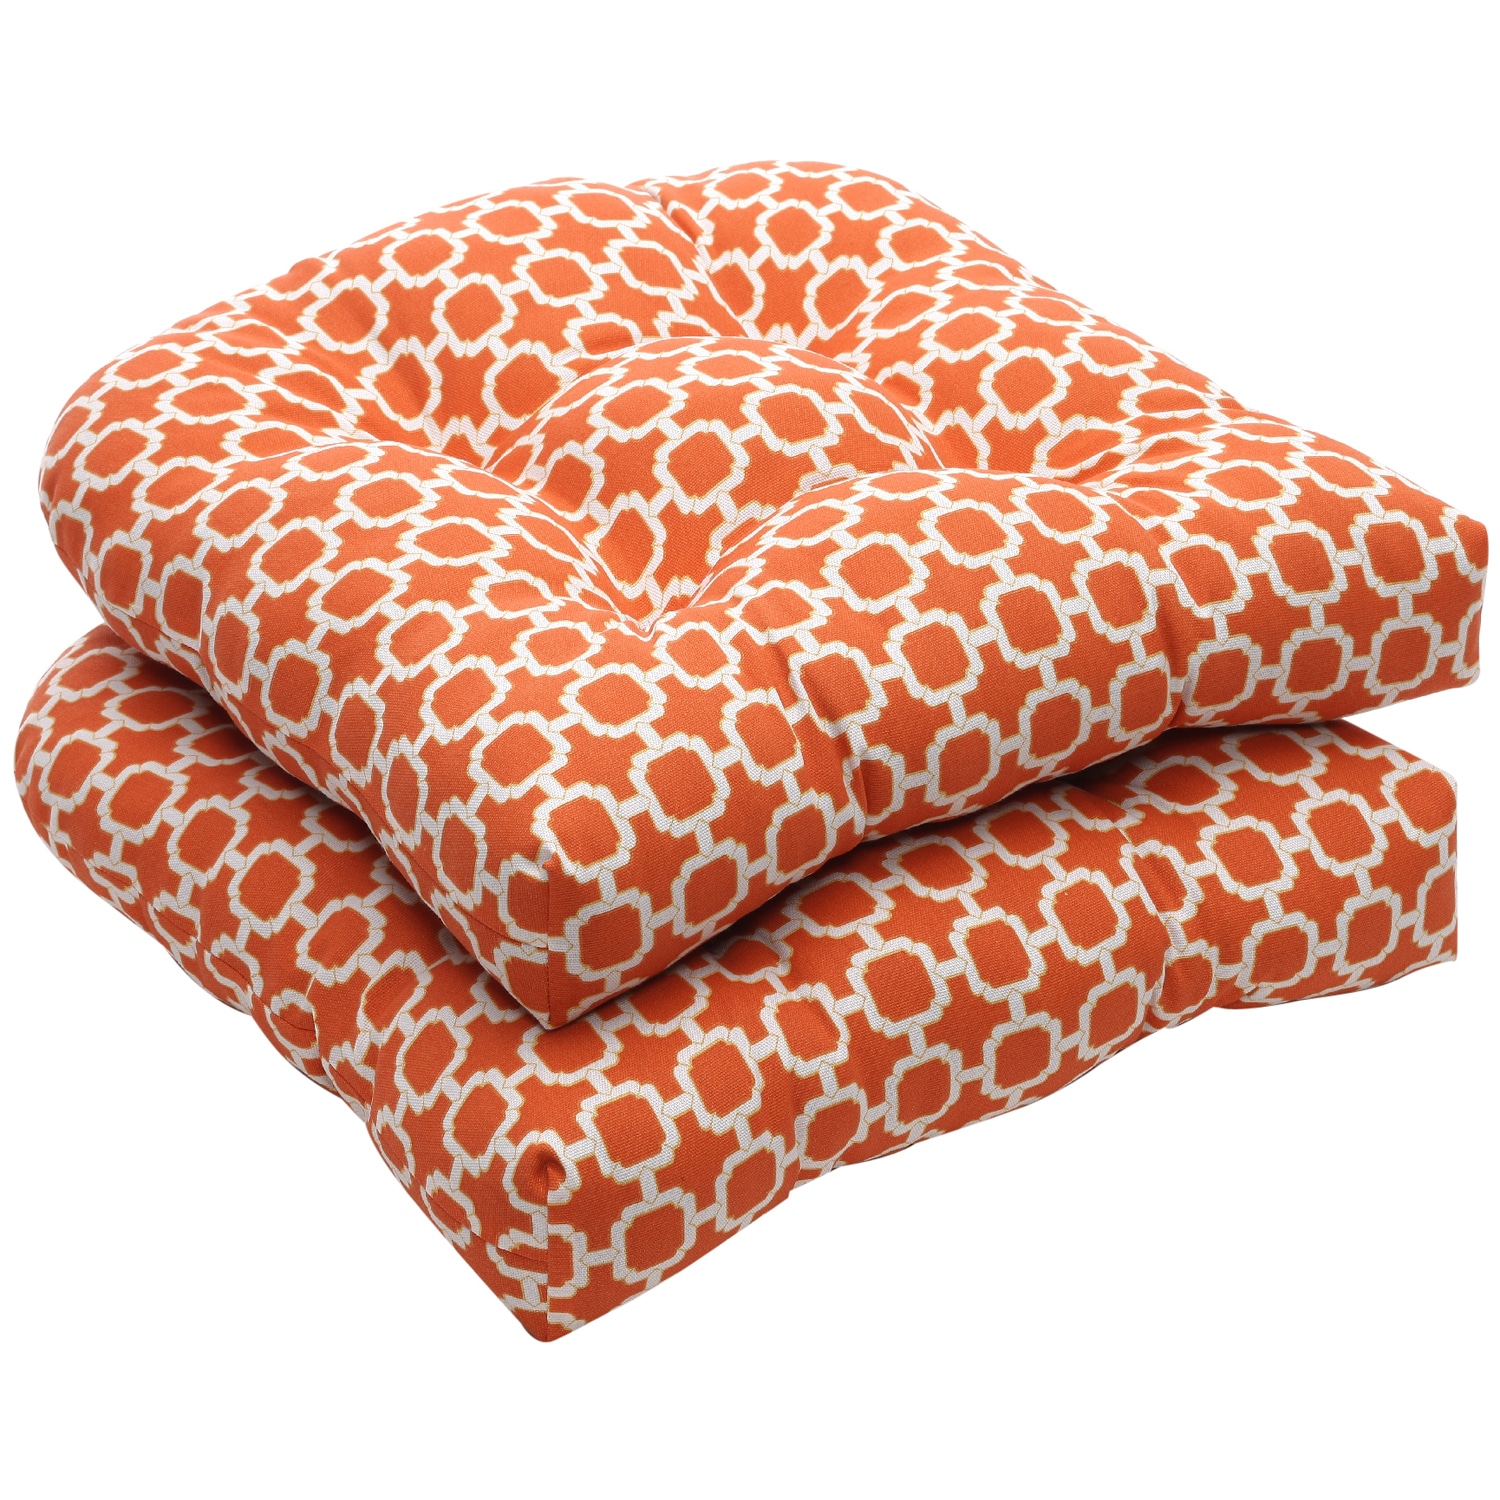 Pillow Perfect Outdoor Geometric Orange/ White Wicker Seat Cushions